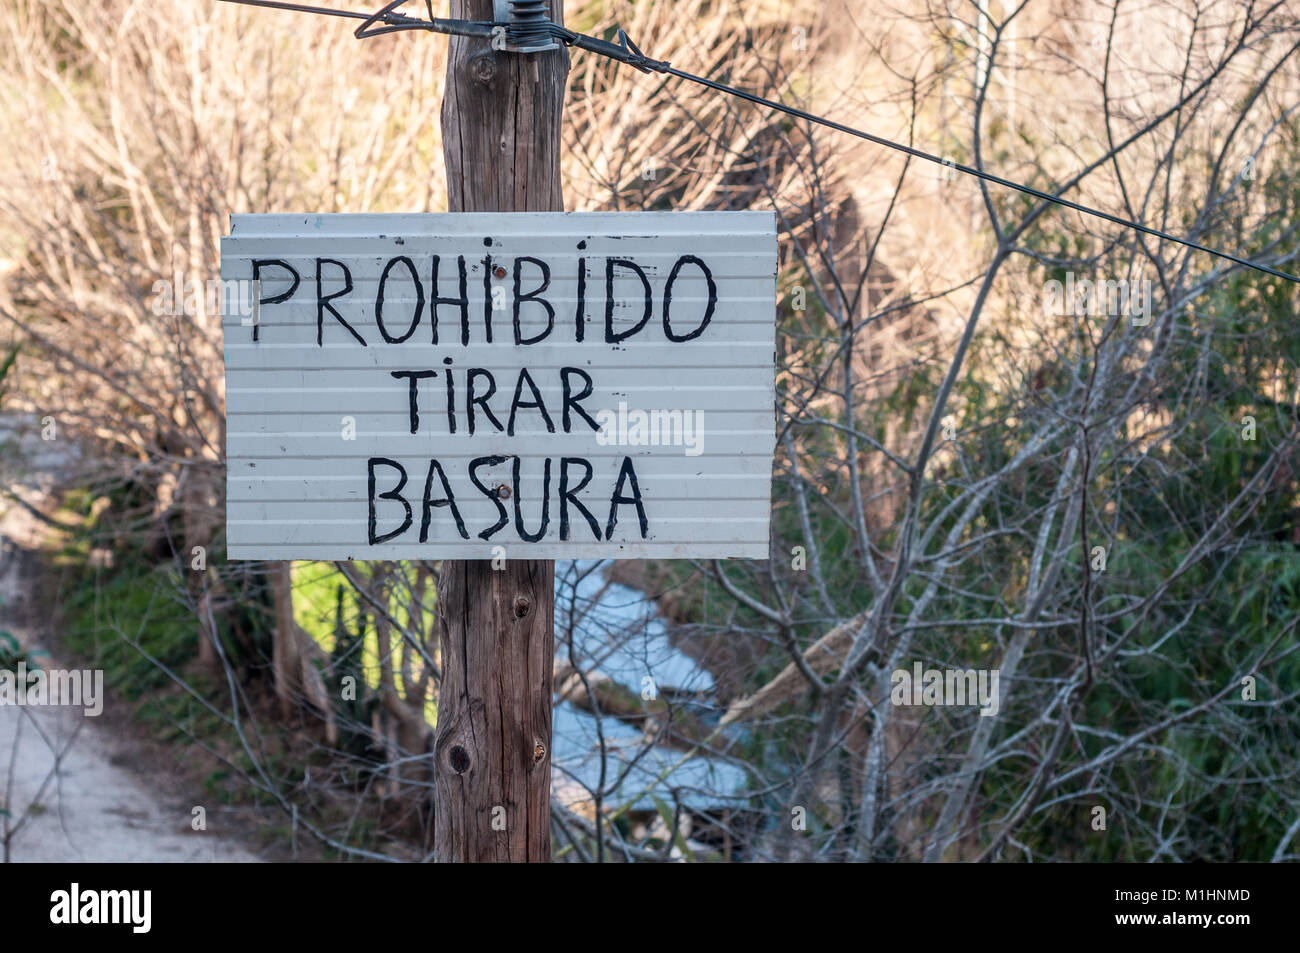 No hay signo de botar basura en español, prohibido tirar basura, Valls,  Tarragona, Cataluña, España Fotografía de stock - Alamy